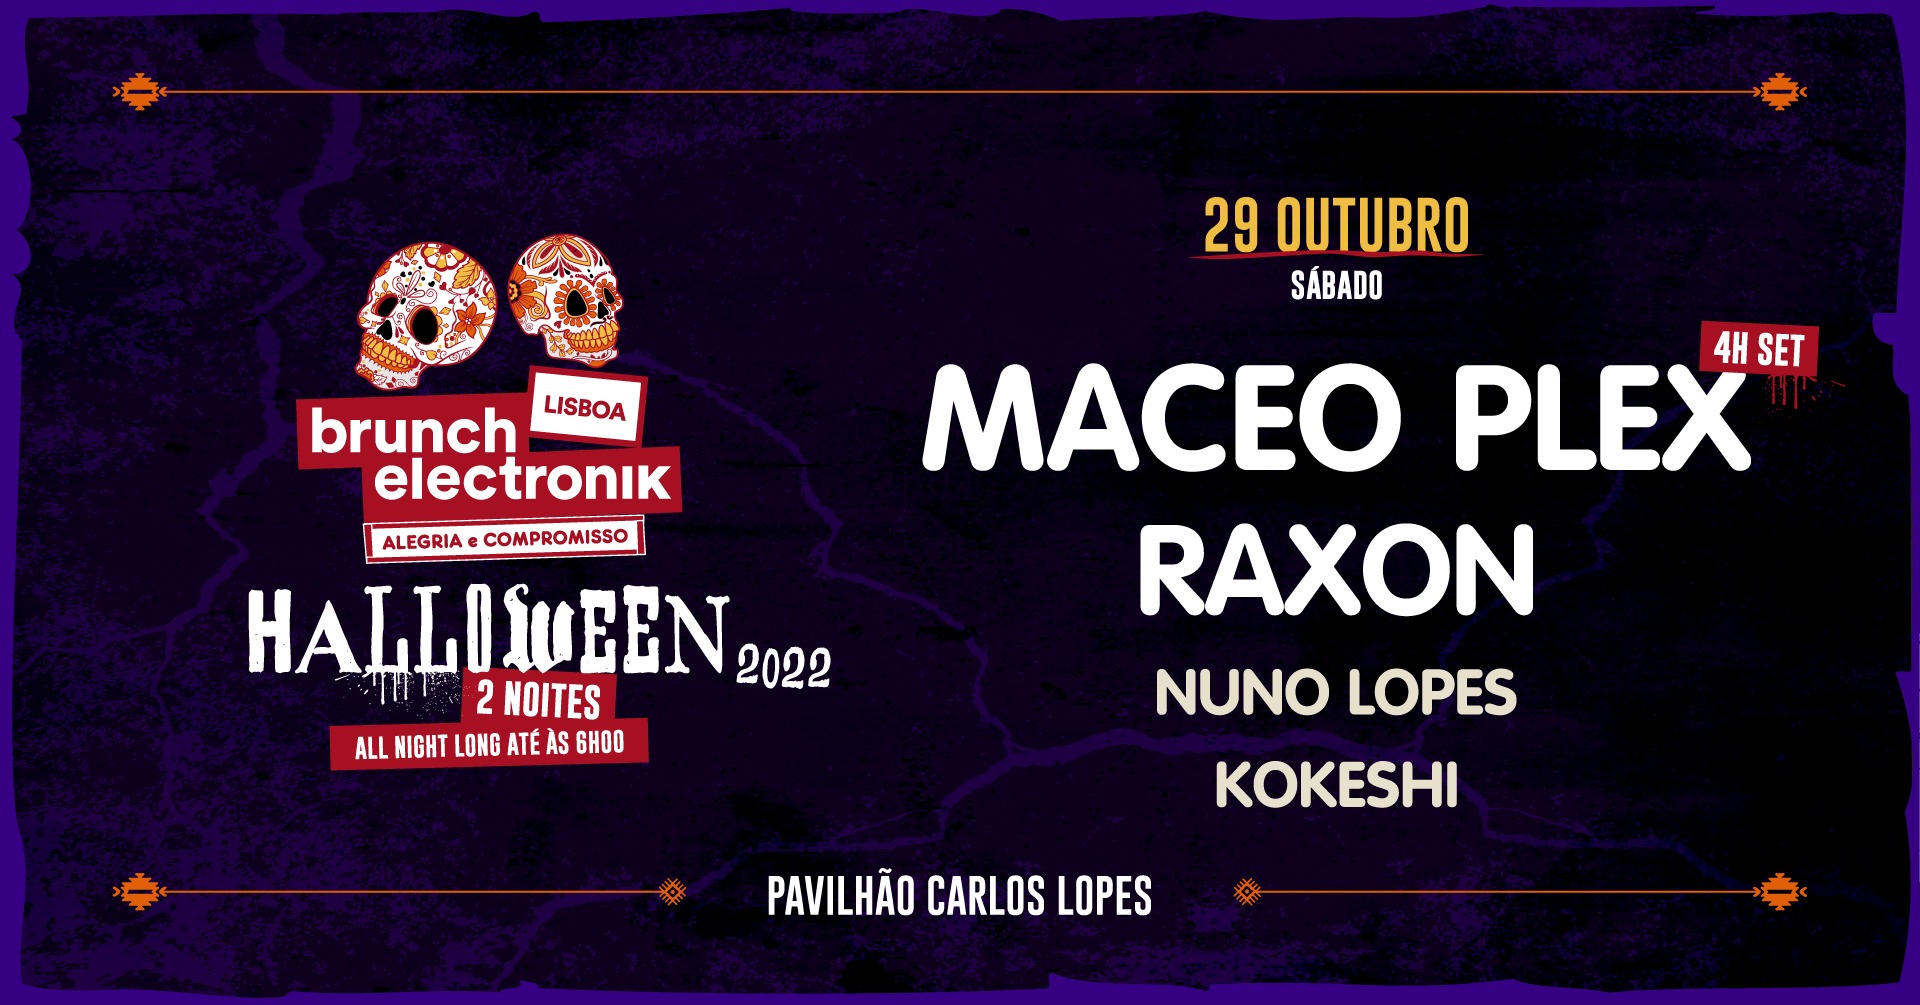 Brunch Electronik In-The City Lisboa - Halloween Party - Maceo Plex 4H SET, Raxon, Nuno Lopes e mais